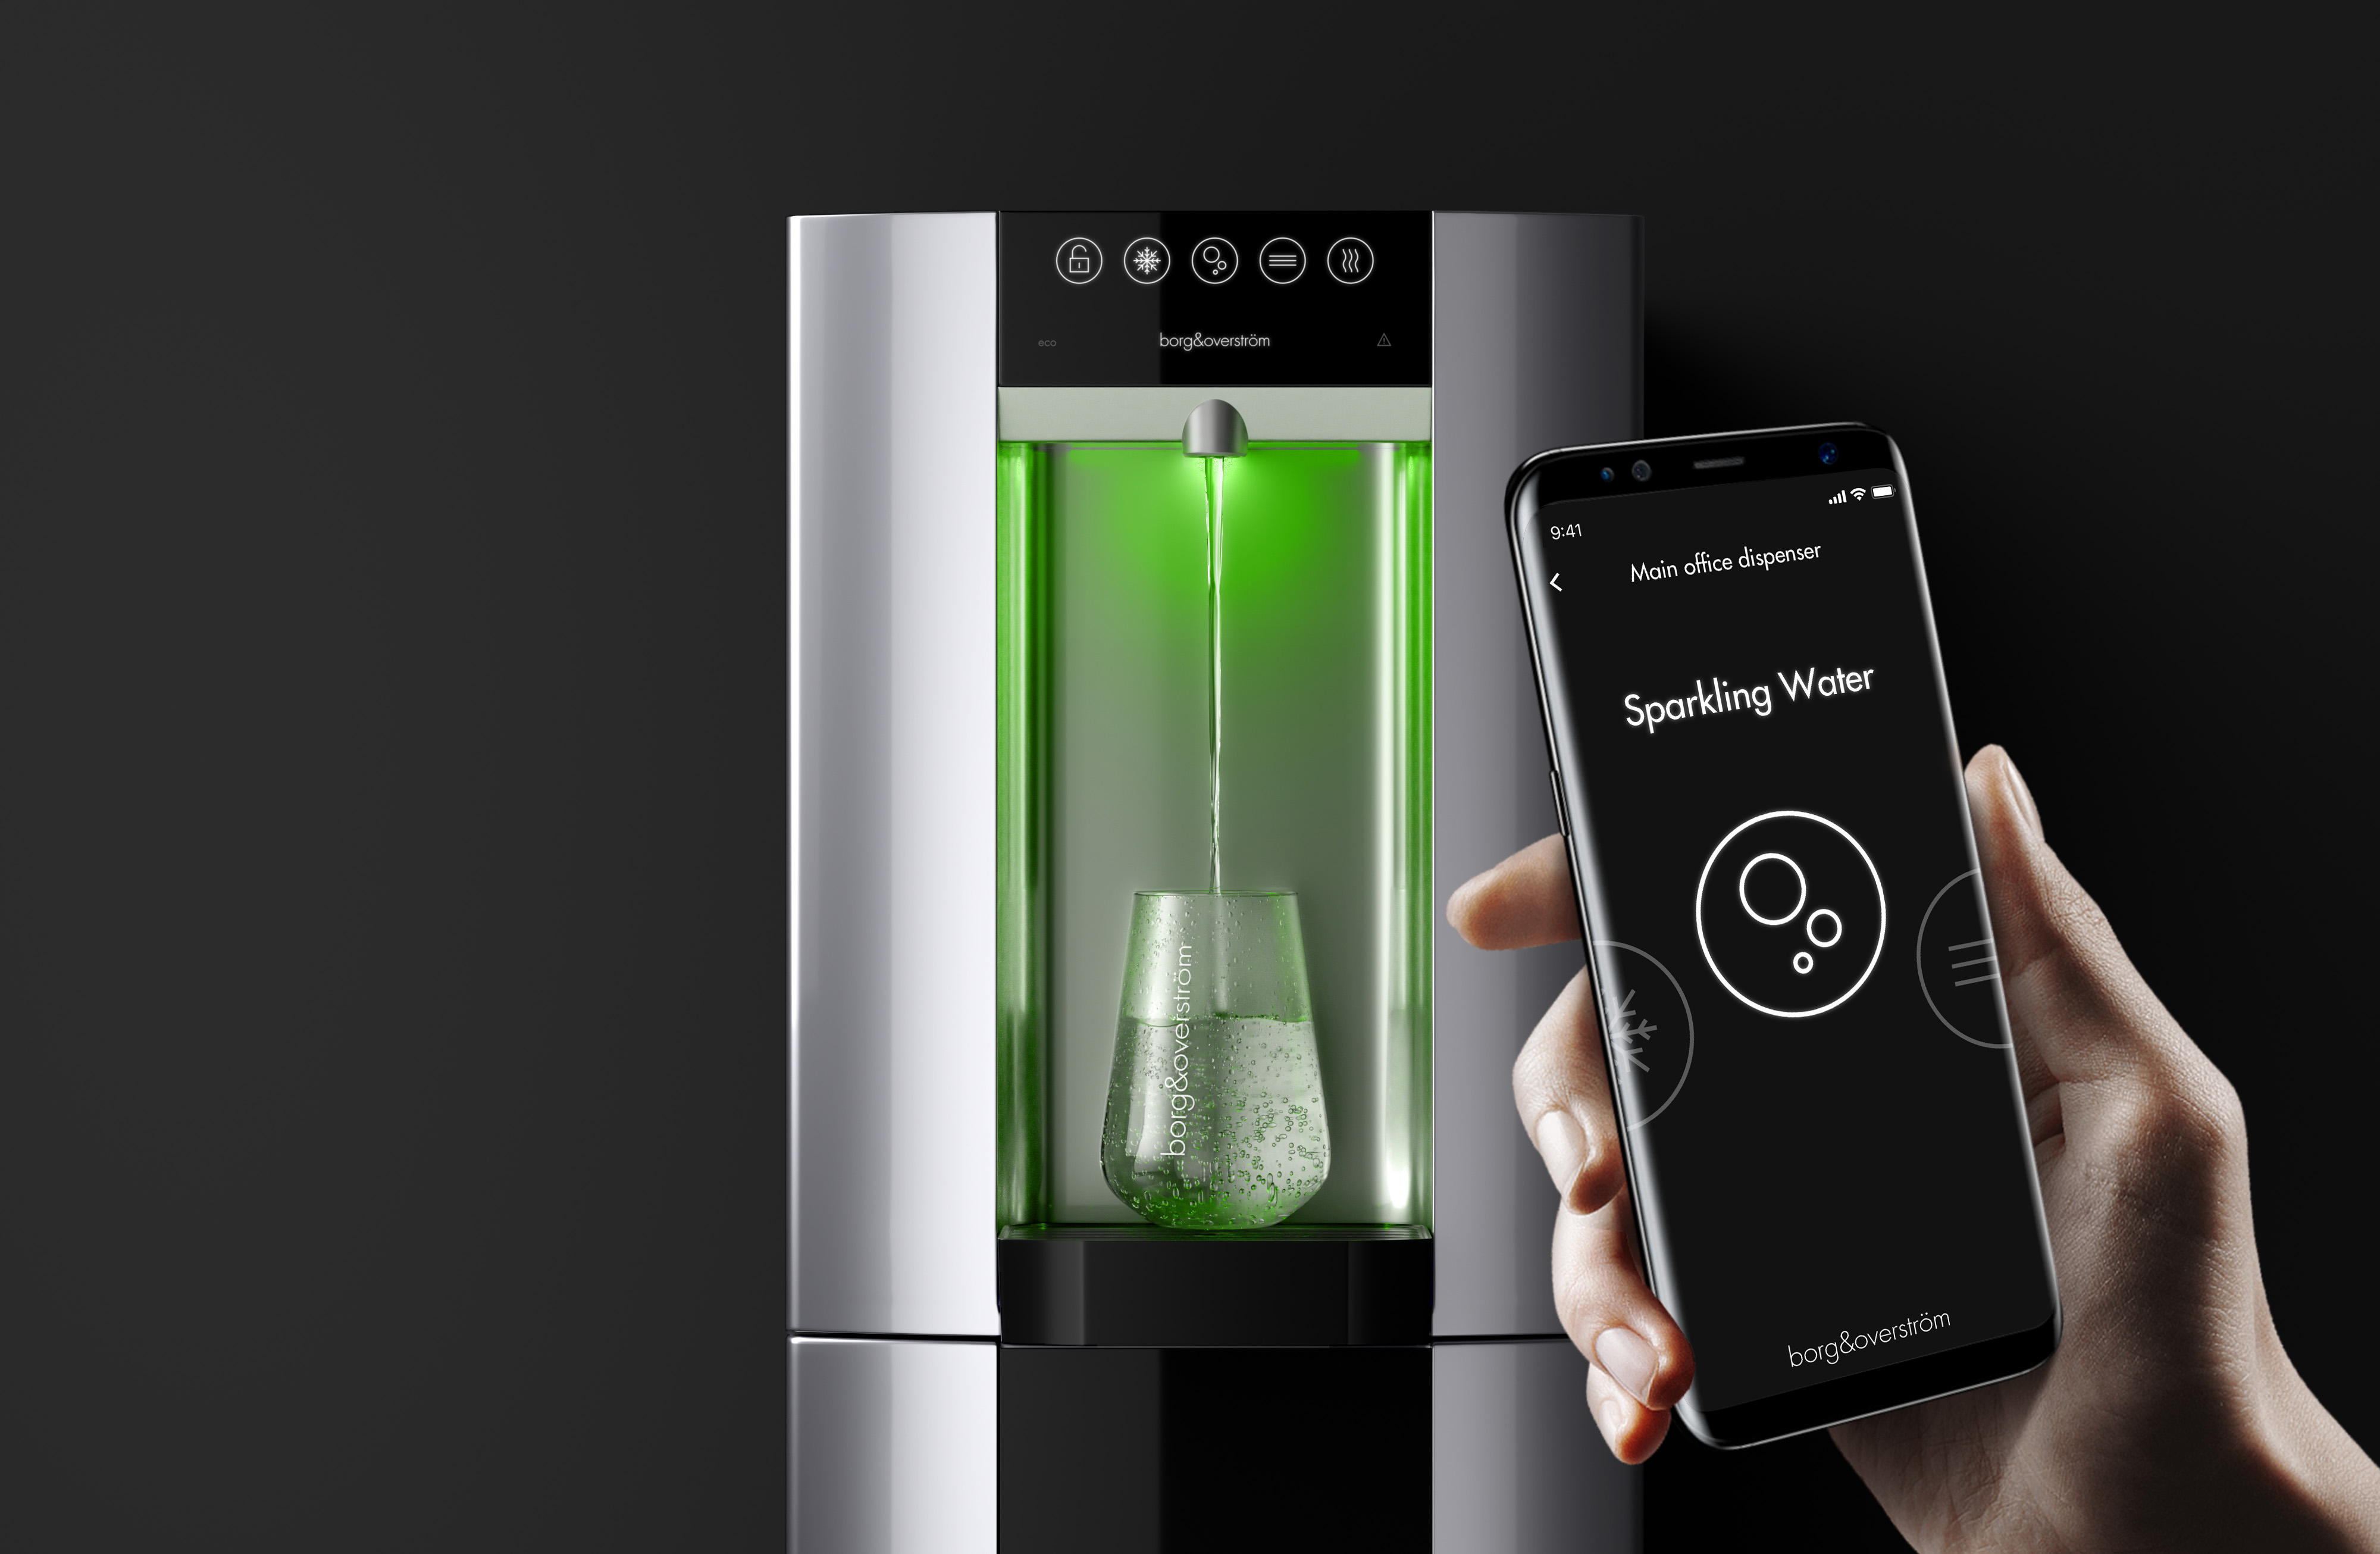 A Borg & Overström B6 dispensing sparkling water via a bluetooth mobile application